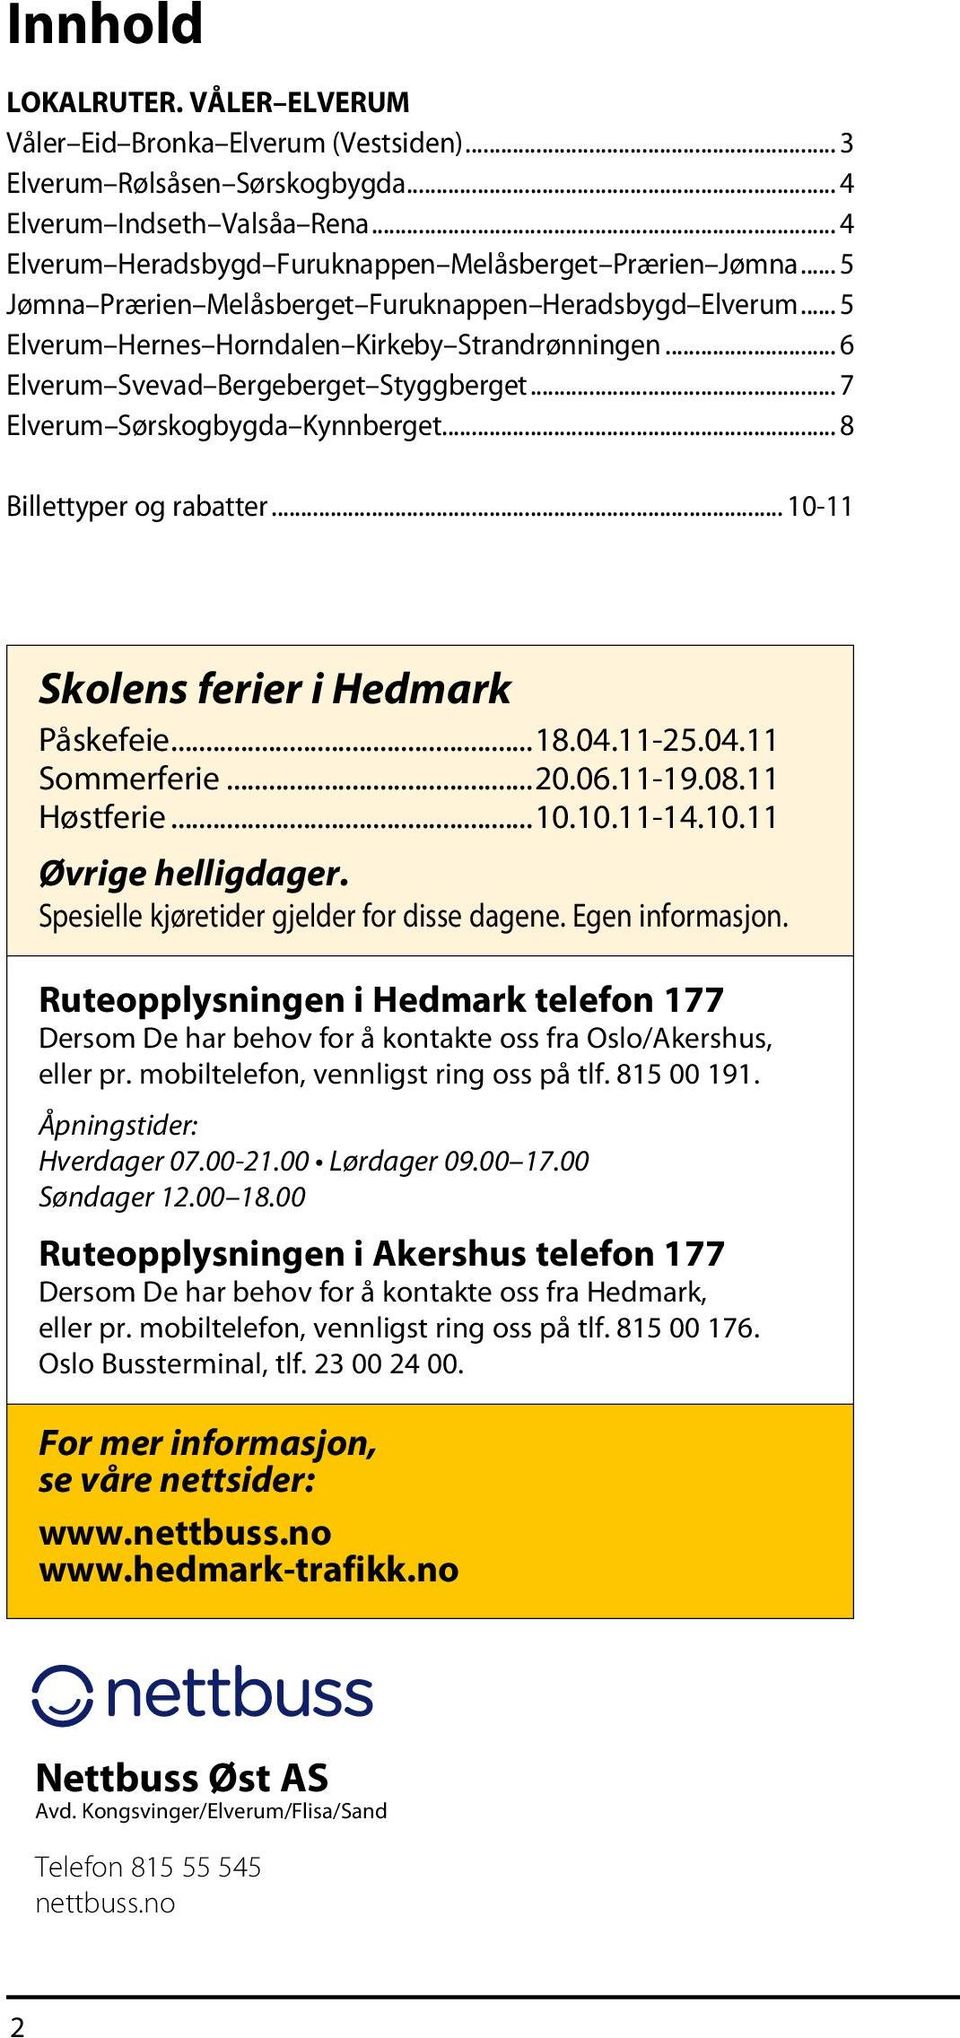 .. 8 Billettyper og rabatter... 10-11 Skolens ferier i Hedmark Påskefeie...18.04.11-25.04.11 Sommerferie...20.06.11-19.08.11 Høstferie...10.10.11-14.10.11 Øvrige helligdager.